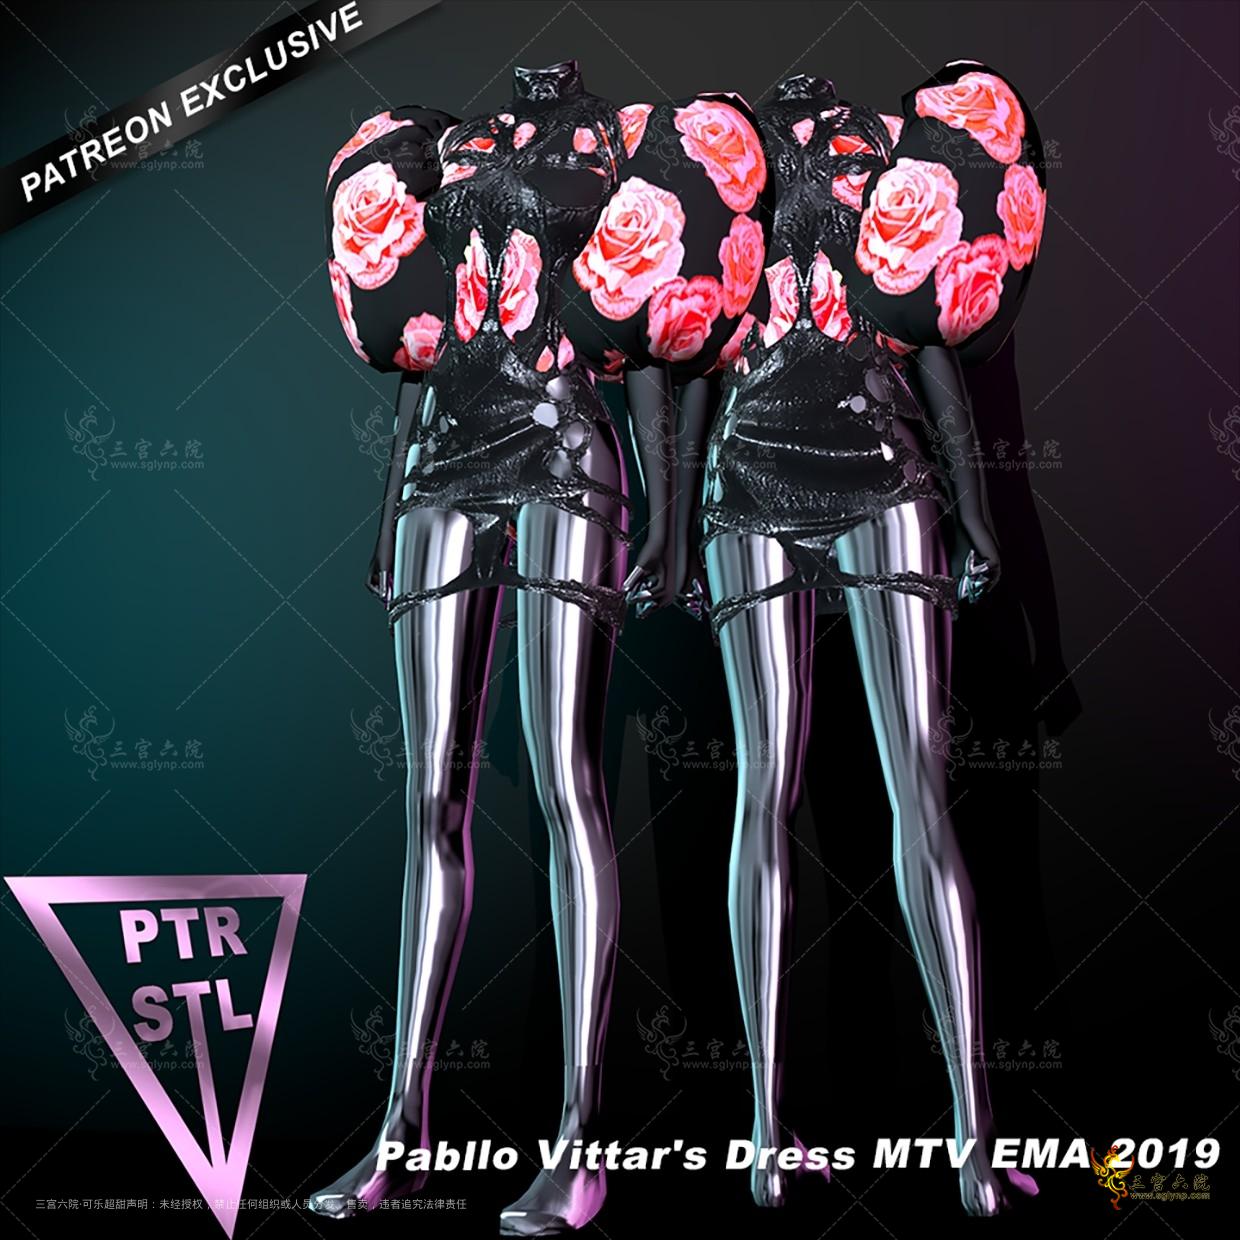 Pietro's Style Pabllo Vittar's Dress MTV EMA 2019.png